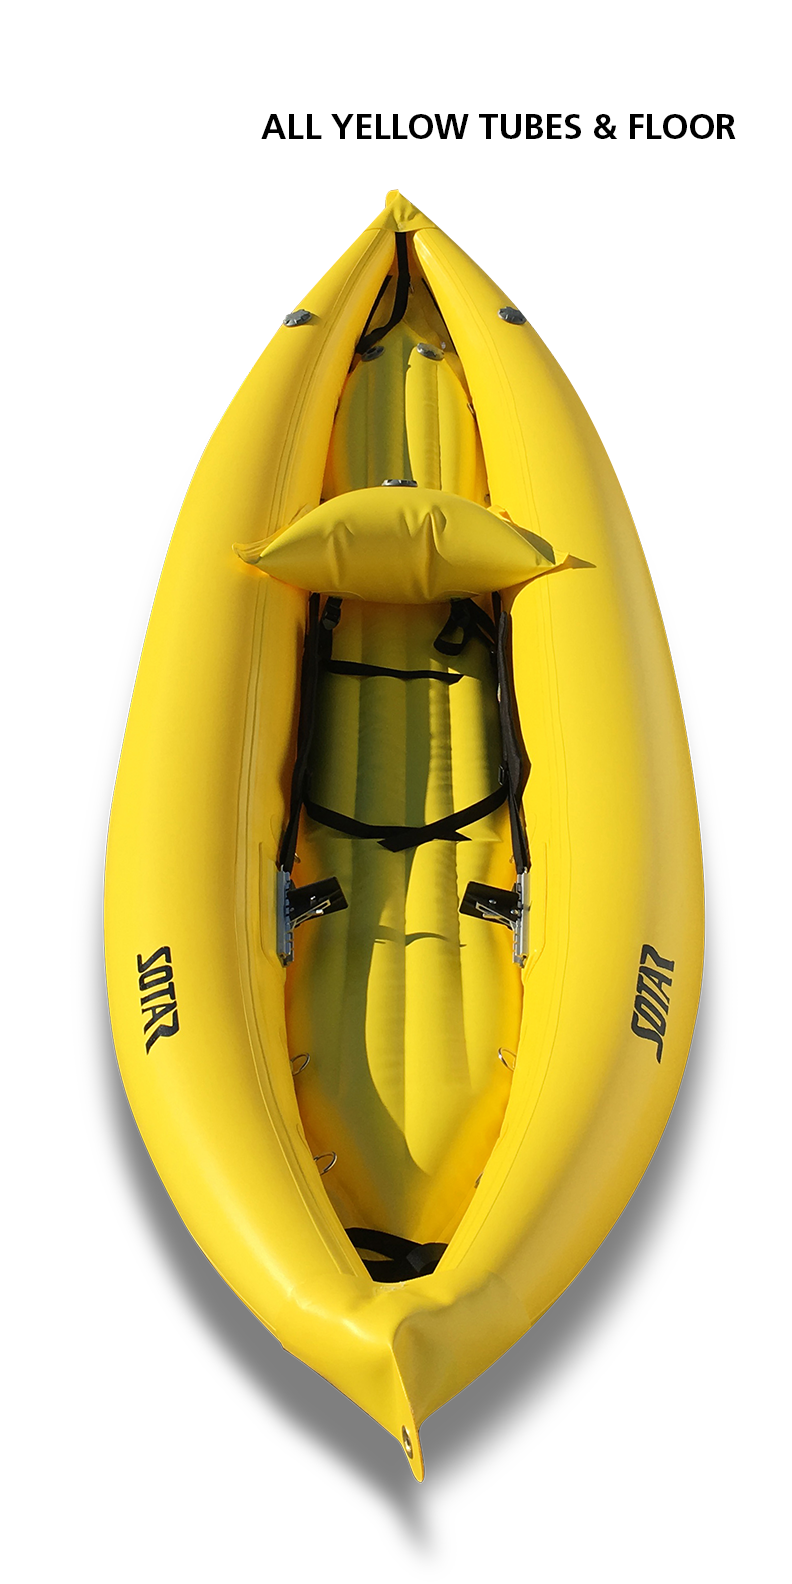 All Yellow SOTAR Inflatable Kayak